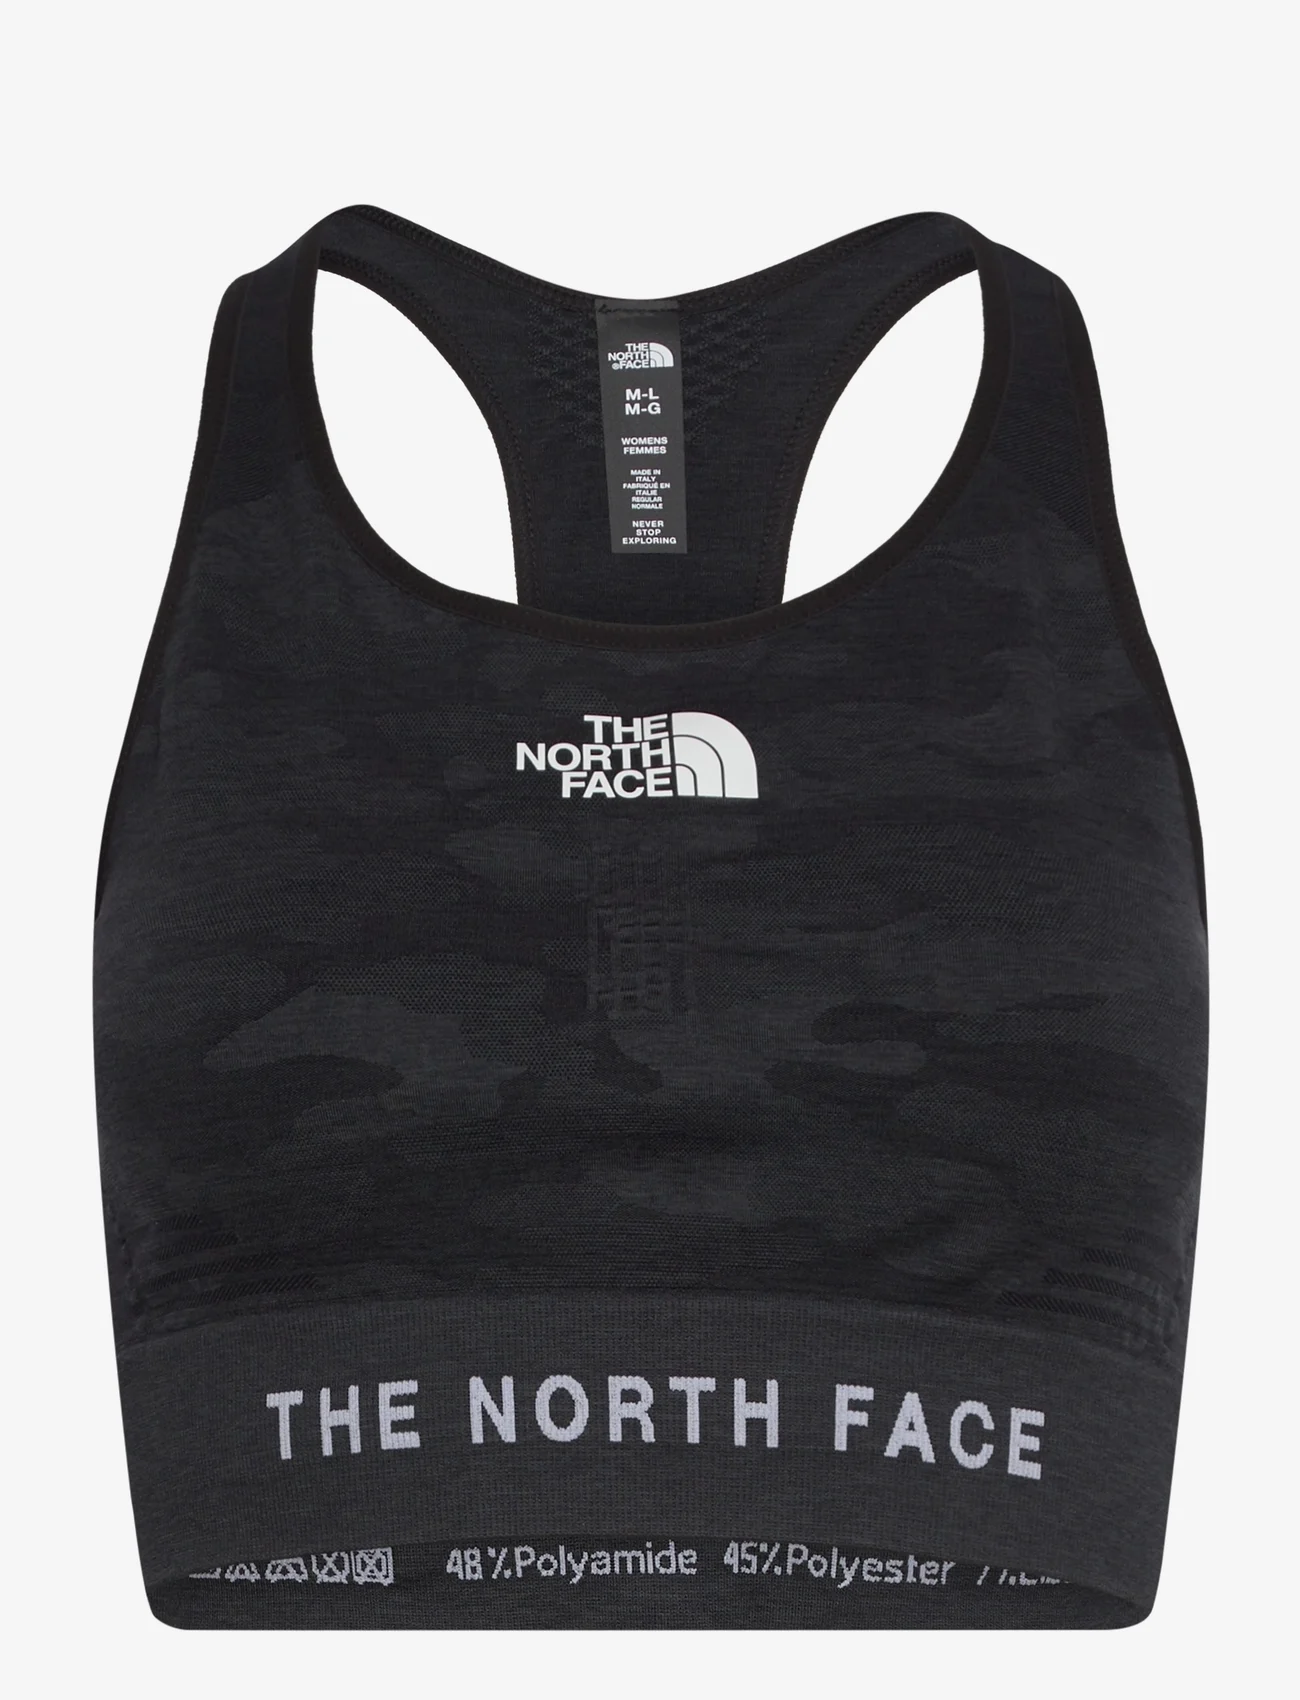 The North Face - WOMEN’S MA LAB SEAMLESS TOP - sievietēm - tnf black/asphalt grey - 0